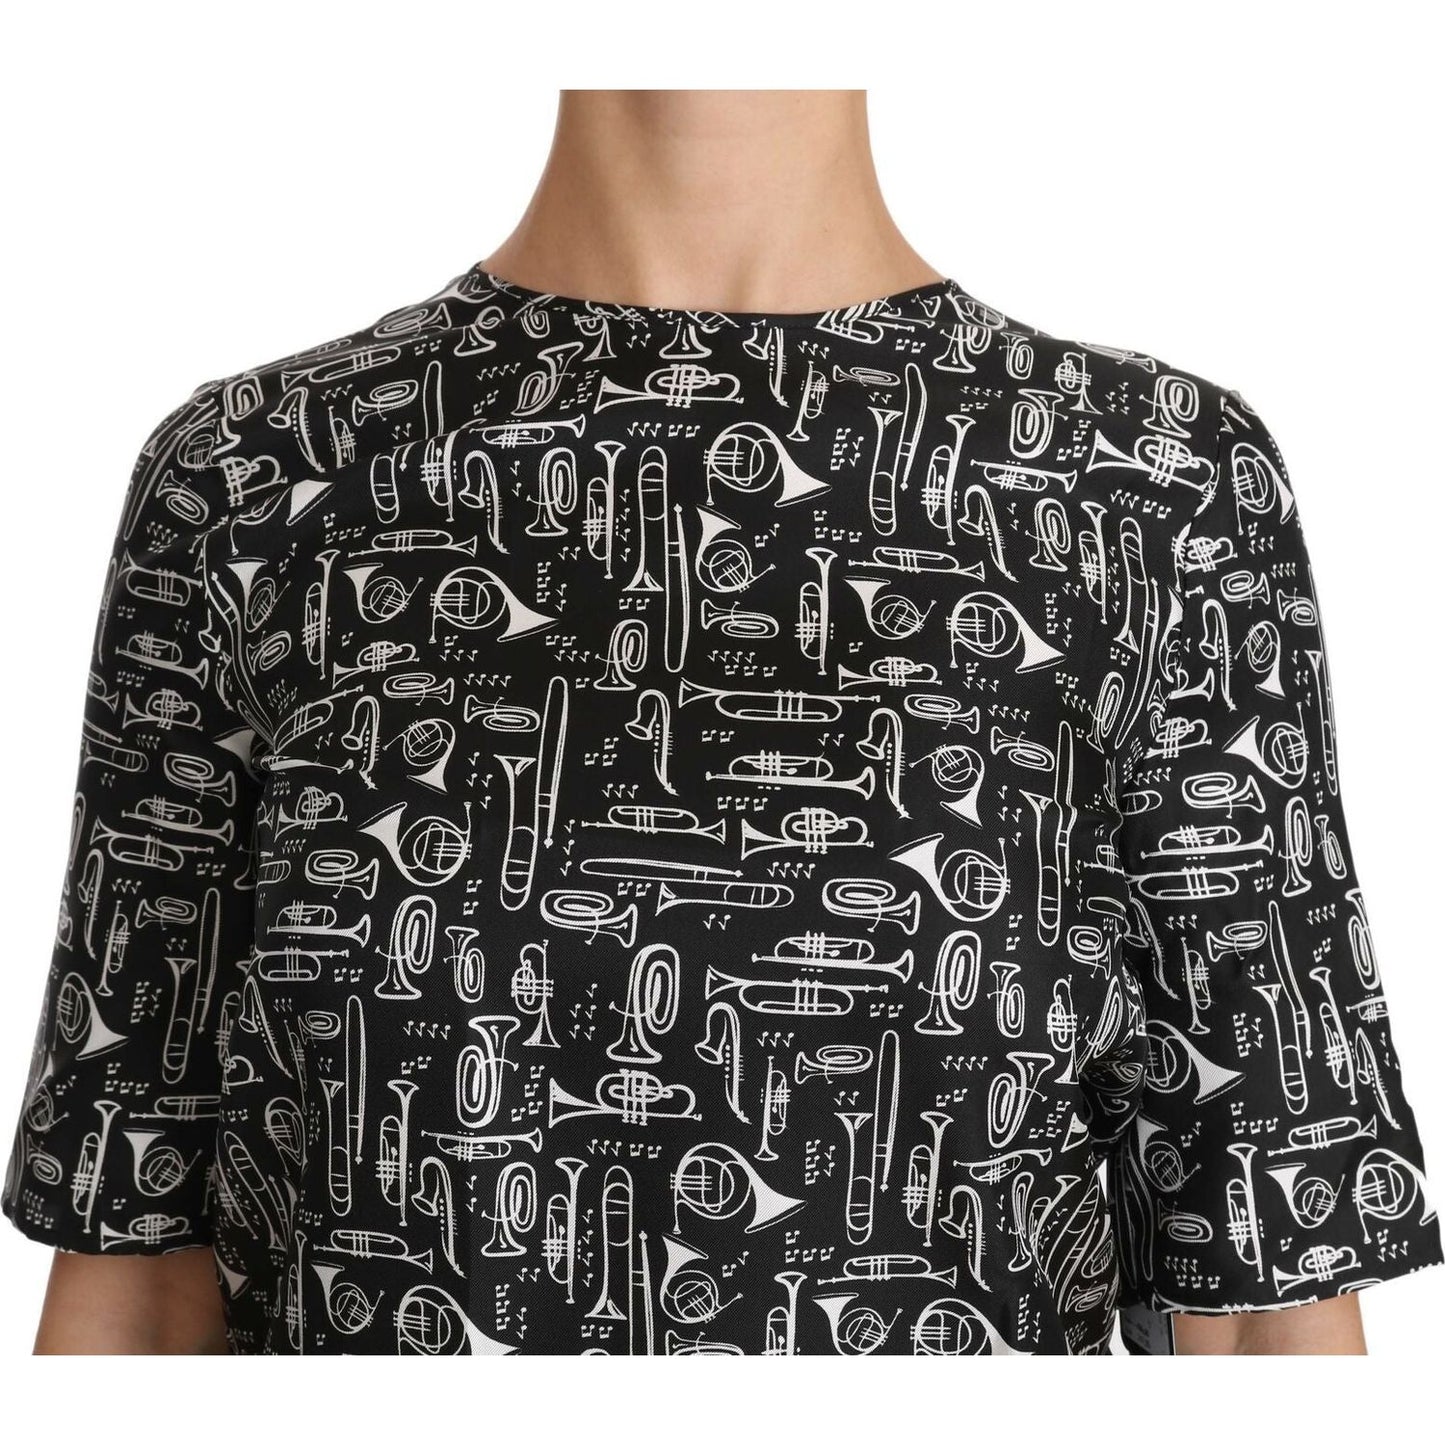 Dolce & Gabbana Exquisite Trumpet Print Silk Blouse black-musical-instruments-print-silk-blouse